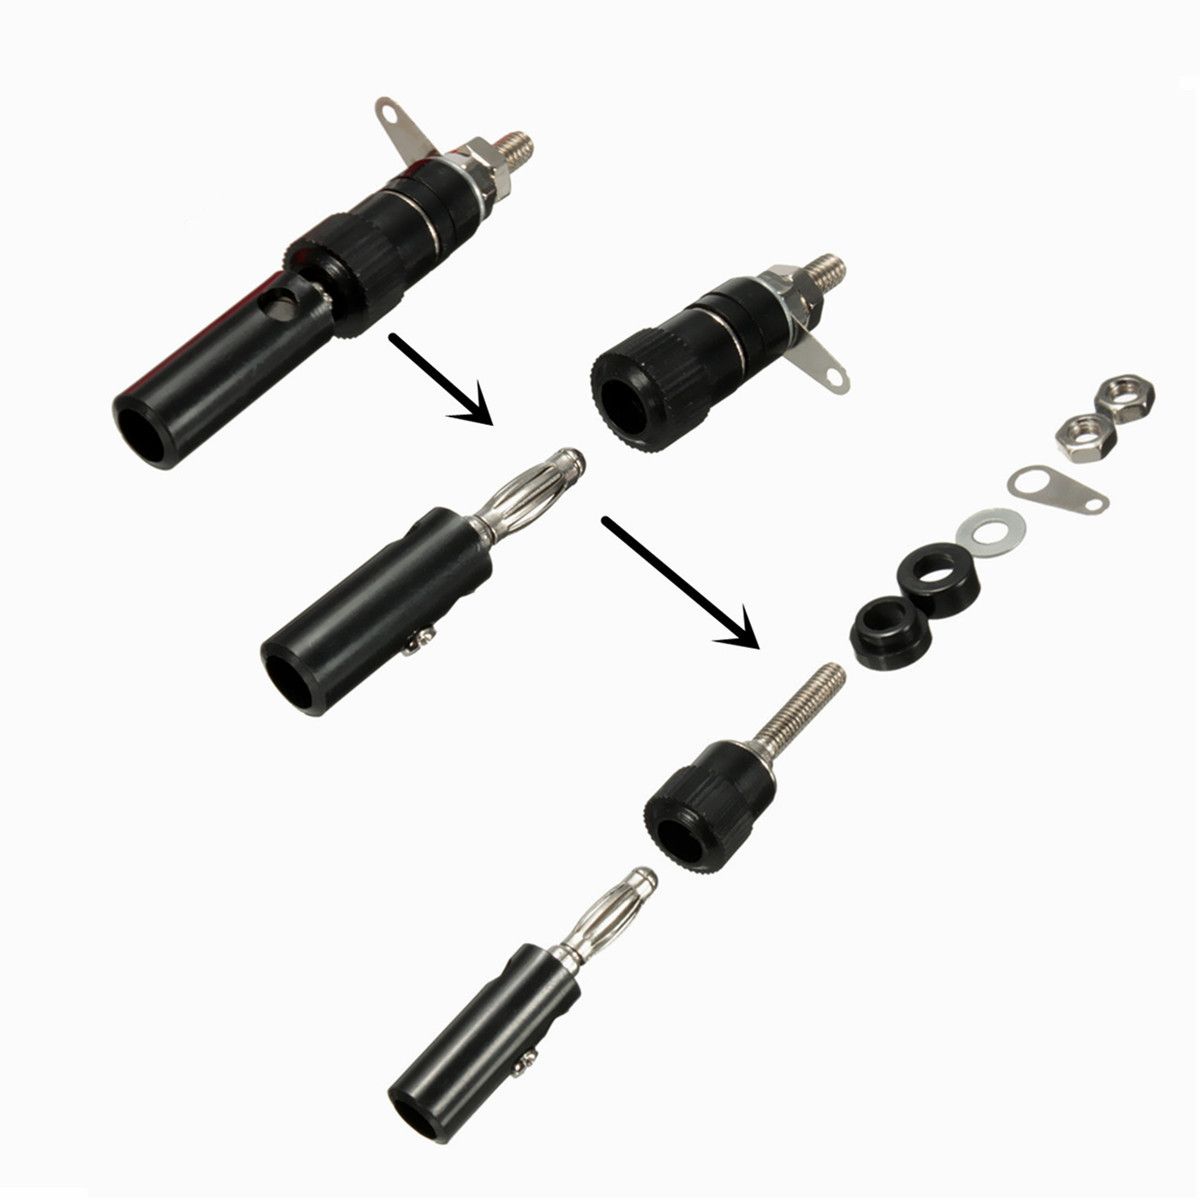 DANIU-50-Pairs-4mm-Terminal-Banana-Plug-Socket-Jack-Connectors-Instrument-Light-Tools-Black-and-Red-1358118